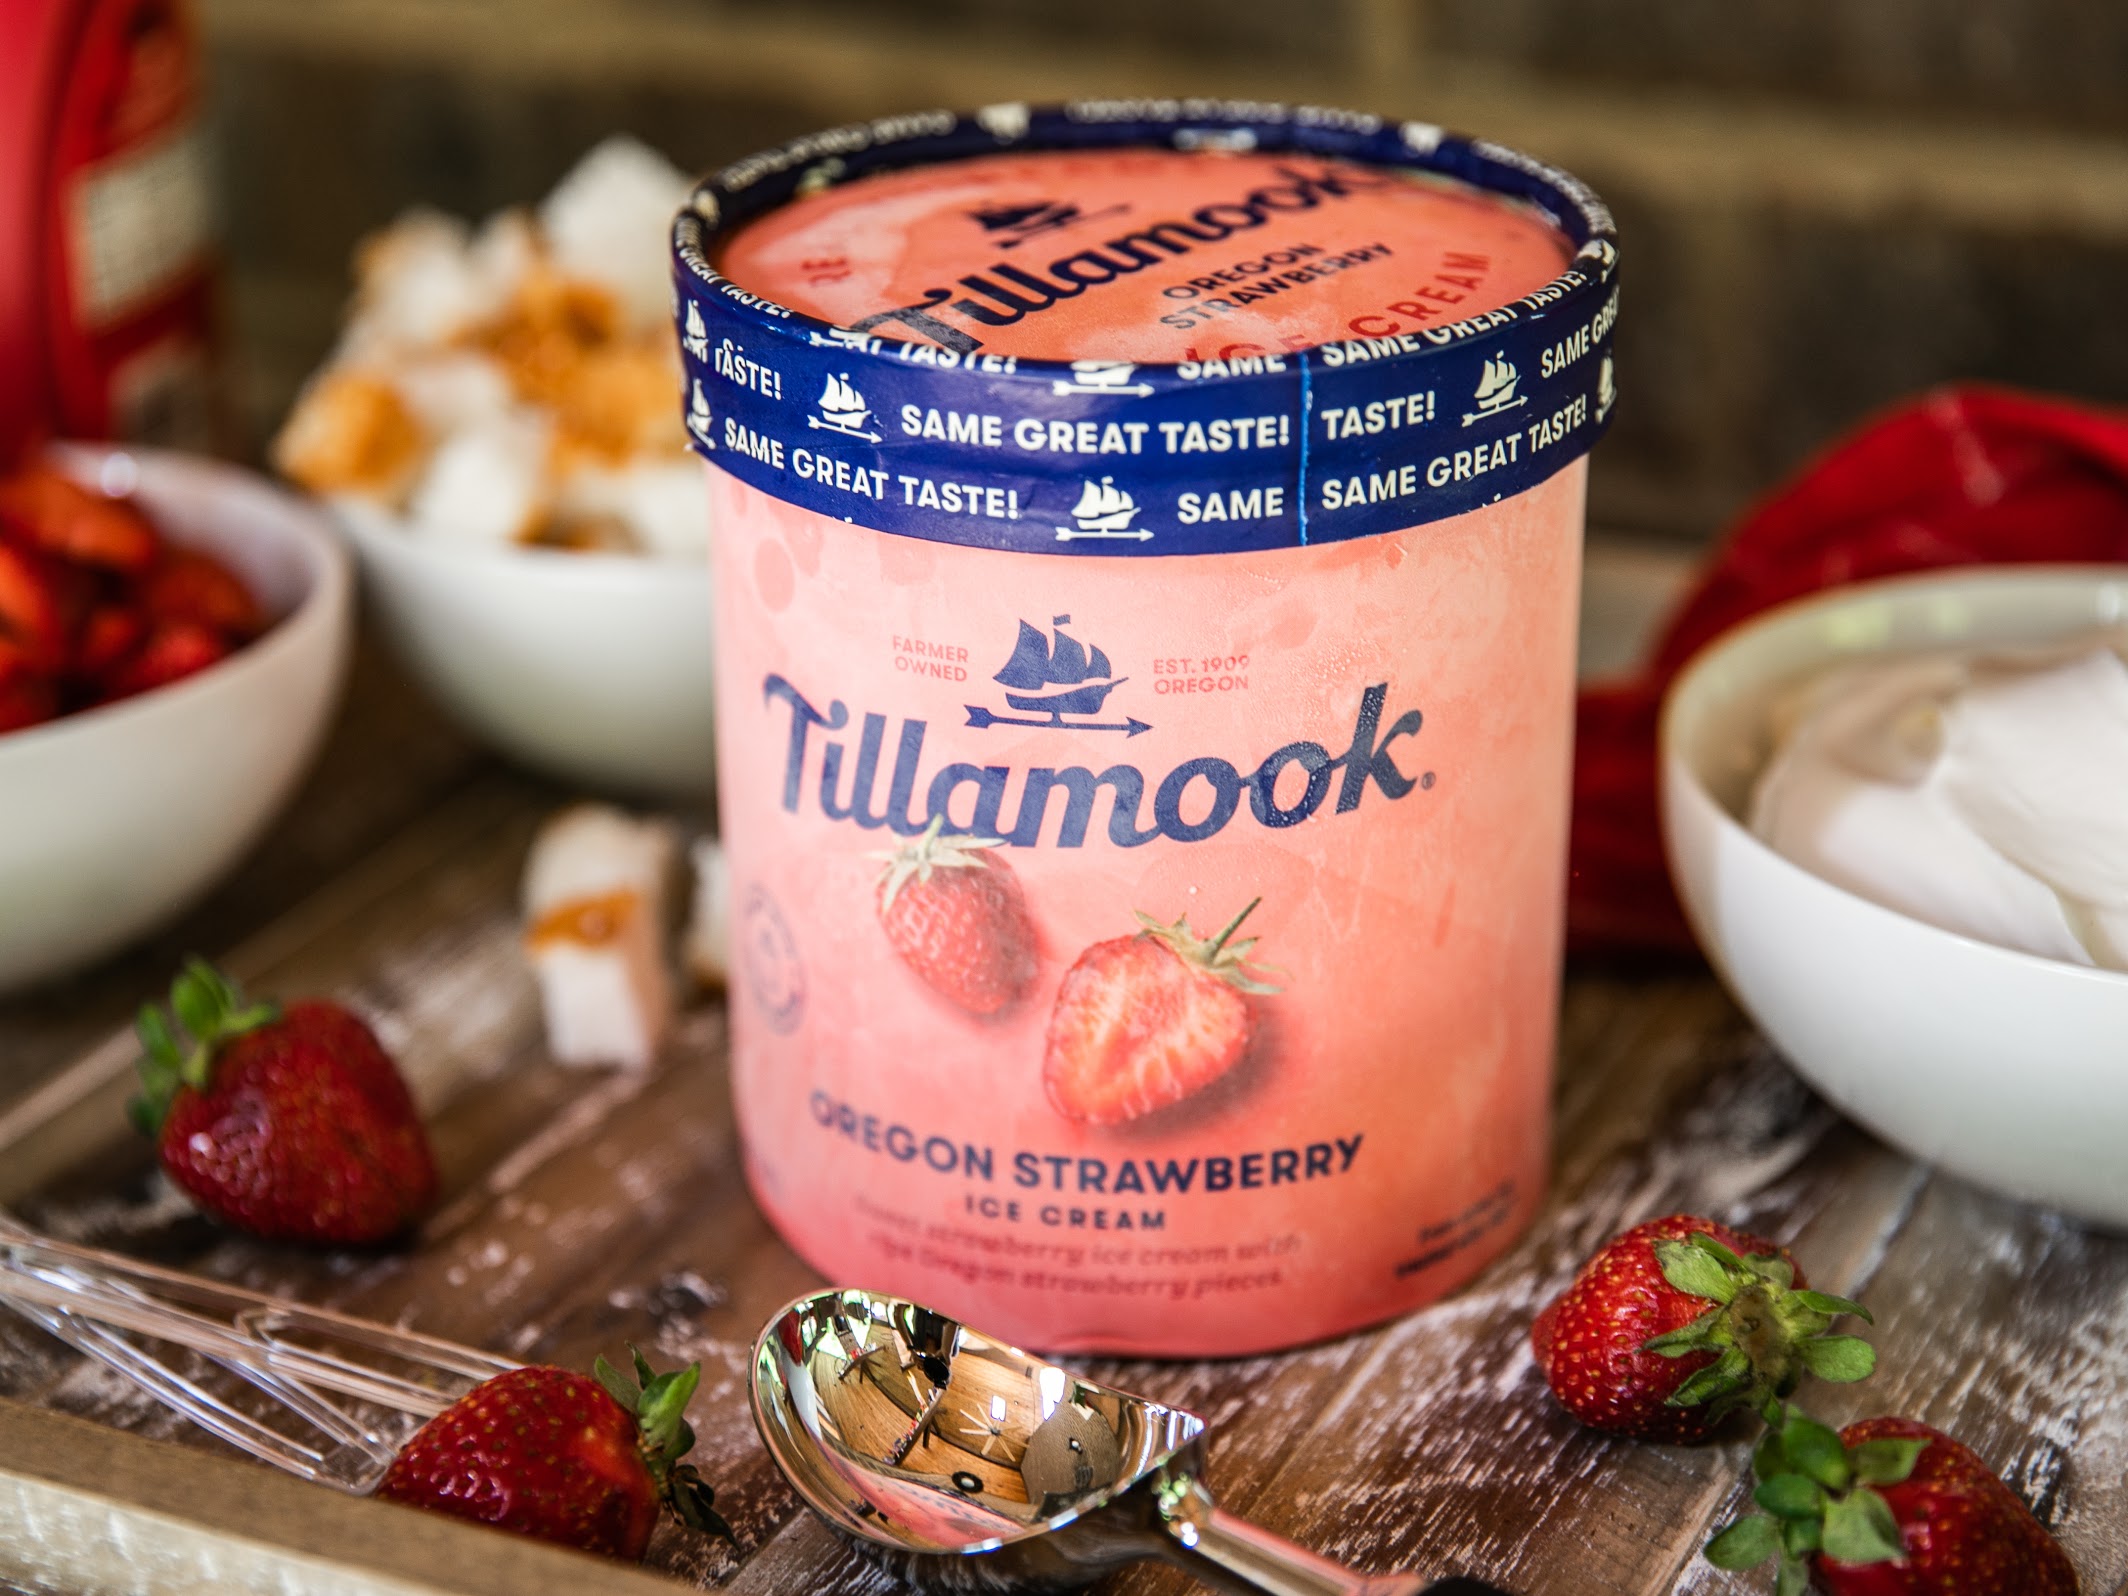 Tillamook Strawberry Shortcake Ice Cream Sundaes - The Ultimate DIY Dessert For Any Get Together on I Heart Publix